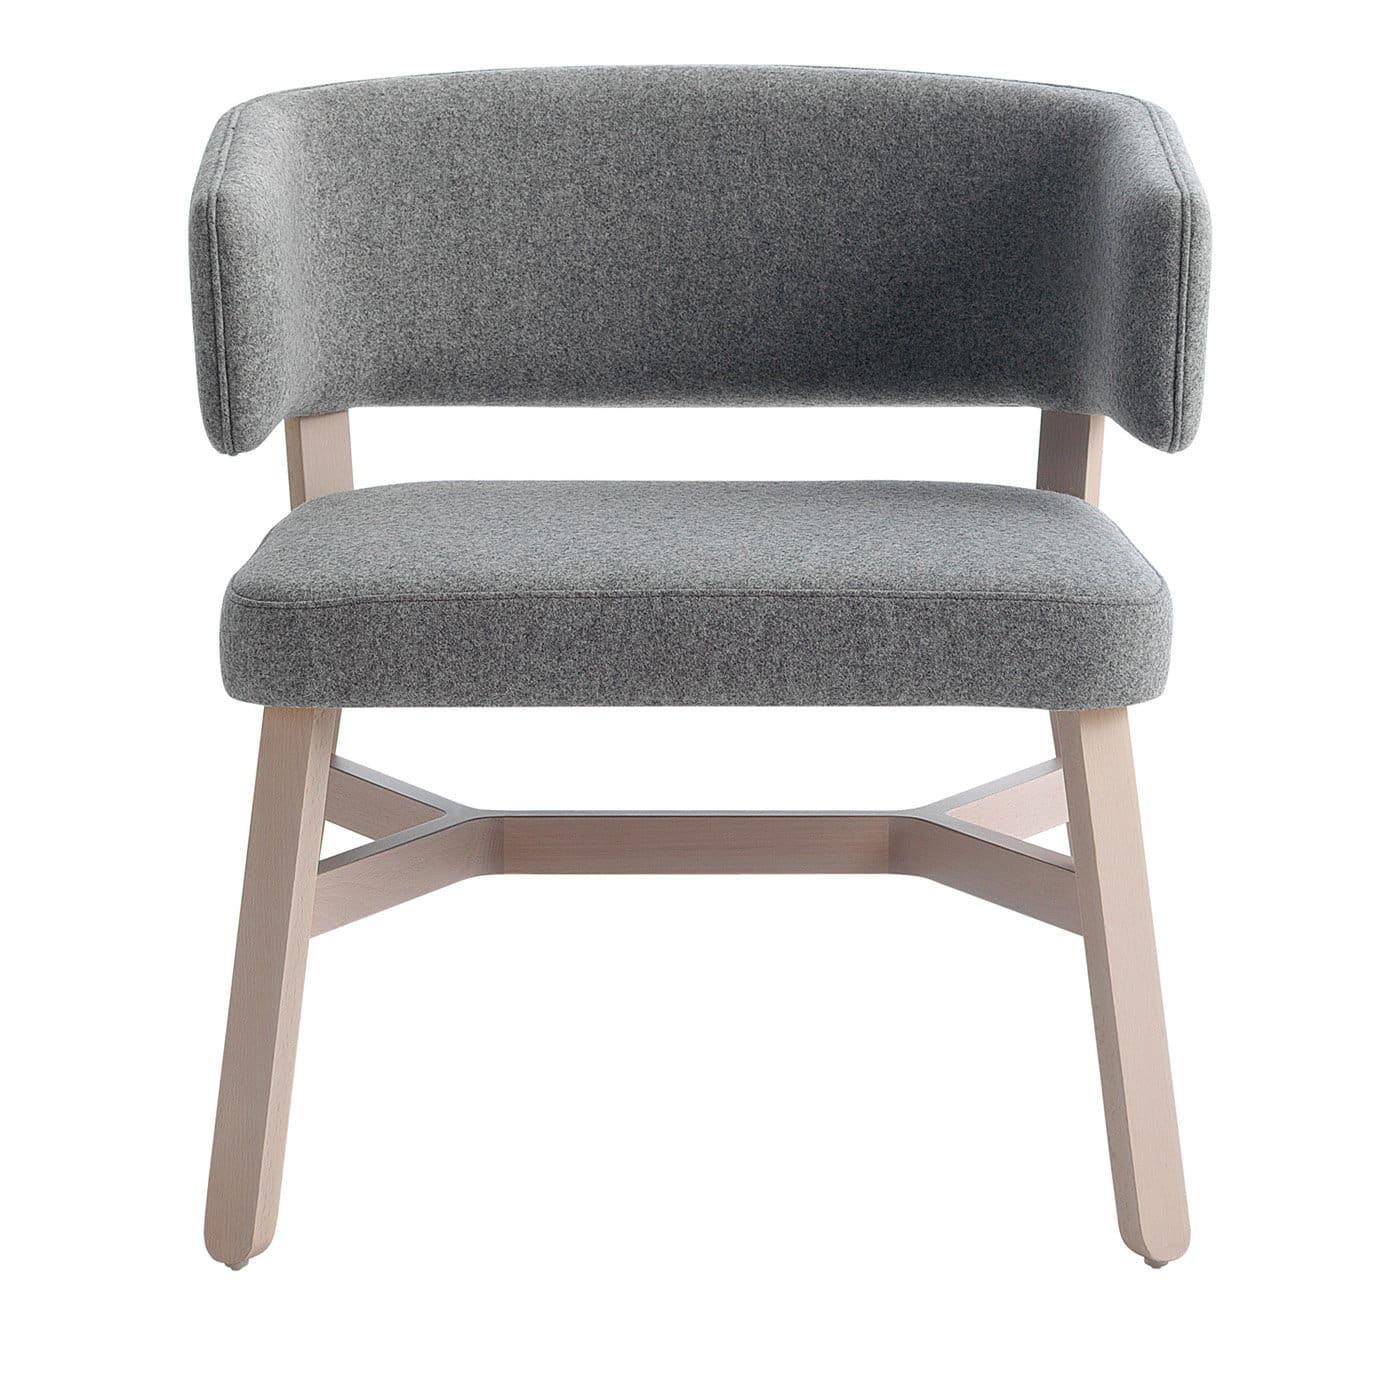 Croissant Lounge Chair by Emilio Nanni #3 For Sale